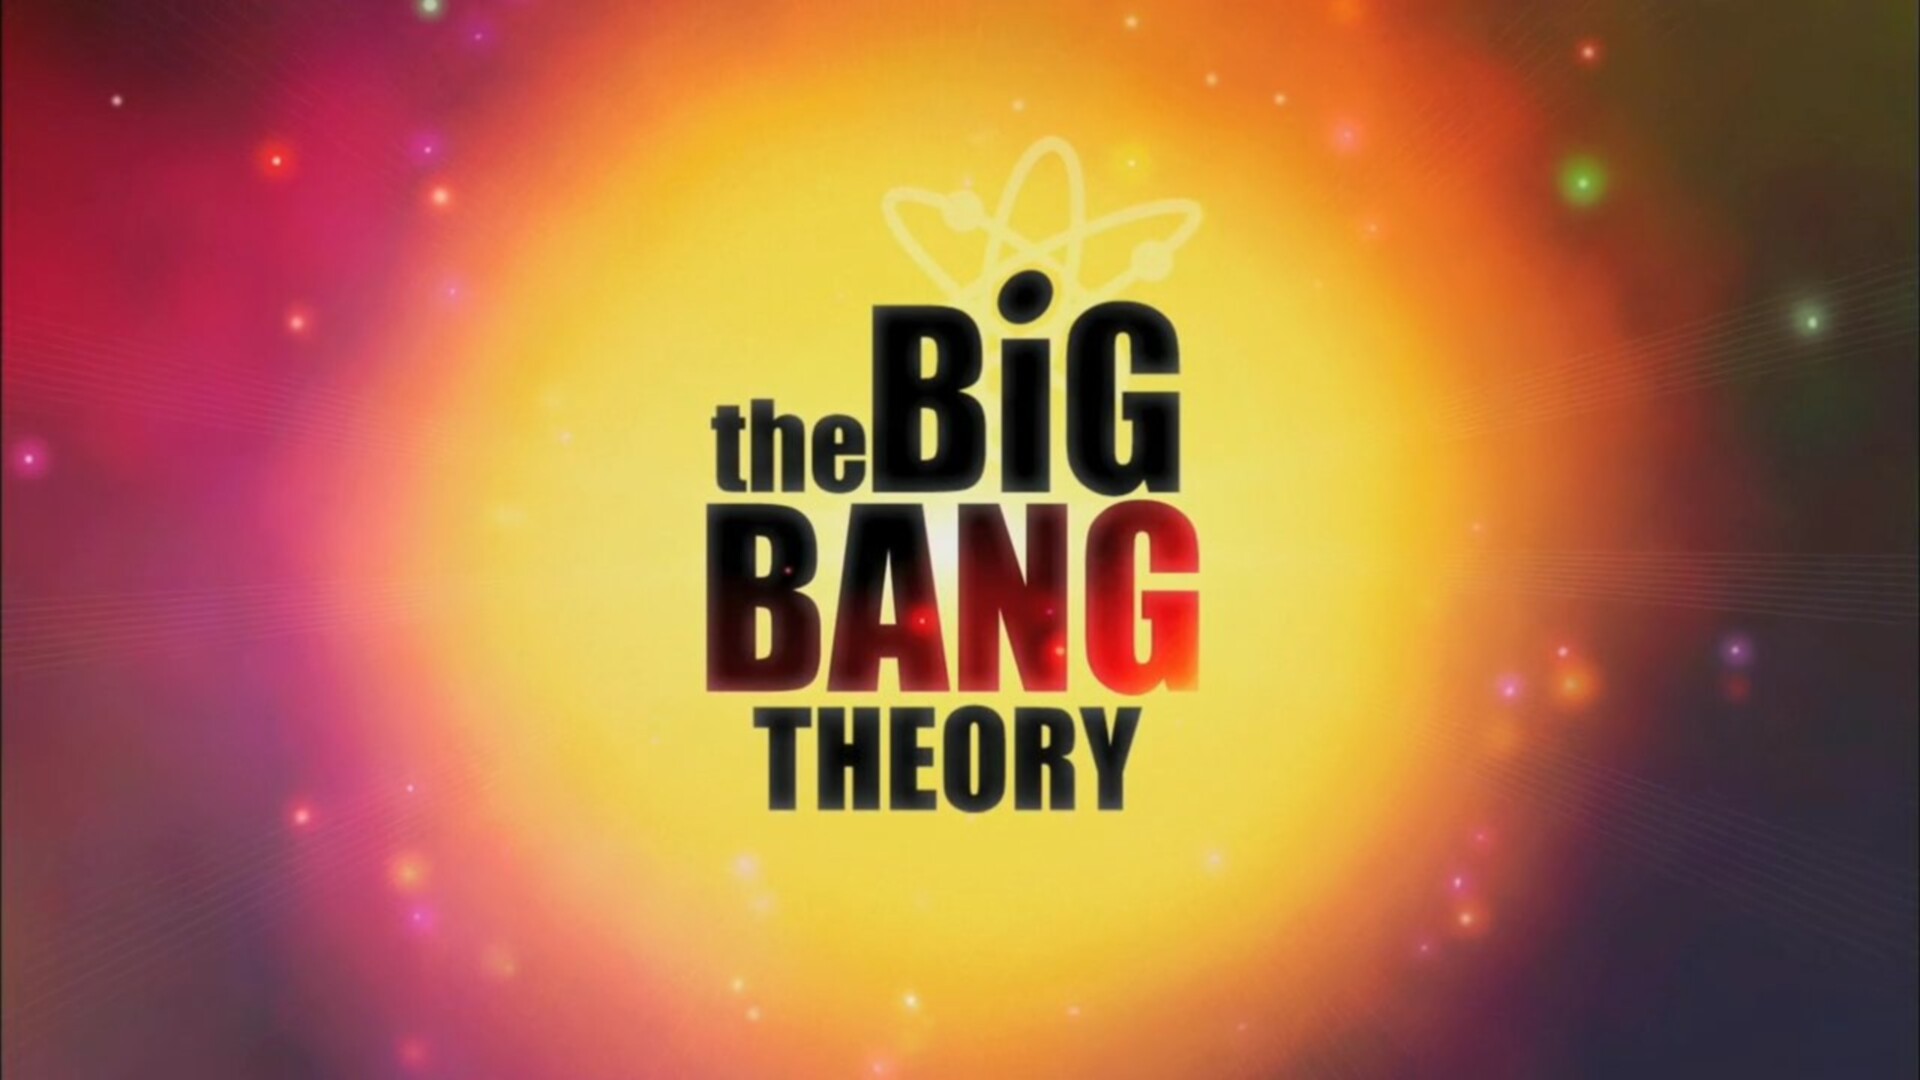 Big Bang Theory HD wallpapers, I have a PC, 1920x1080 Full HD Desktop